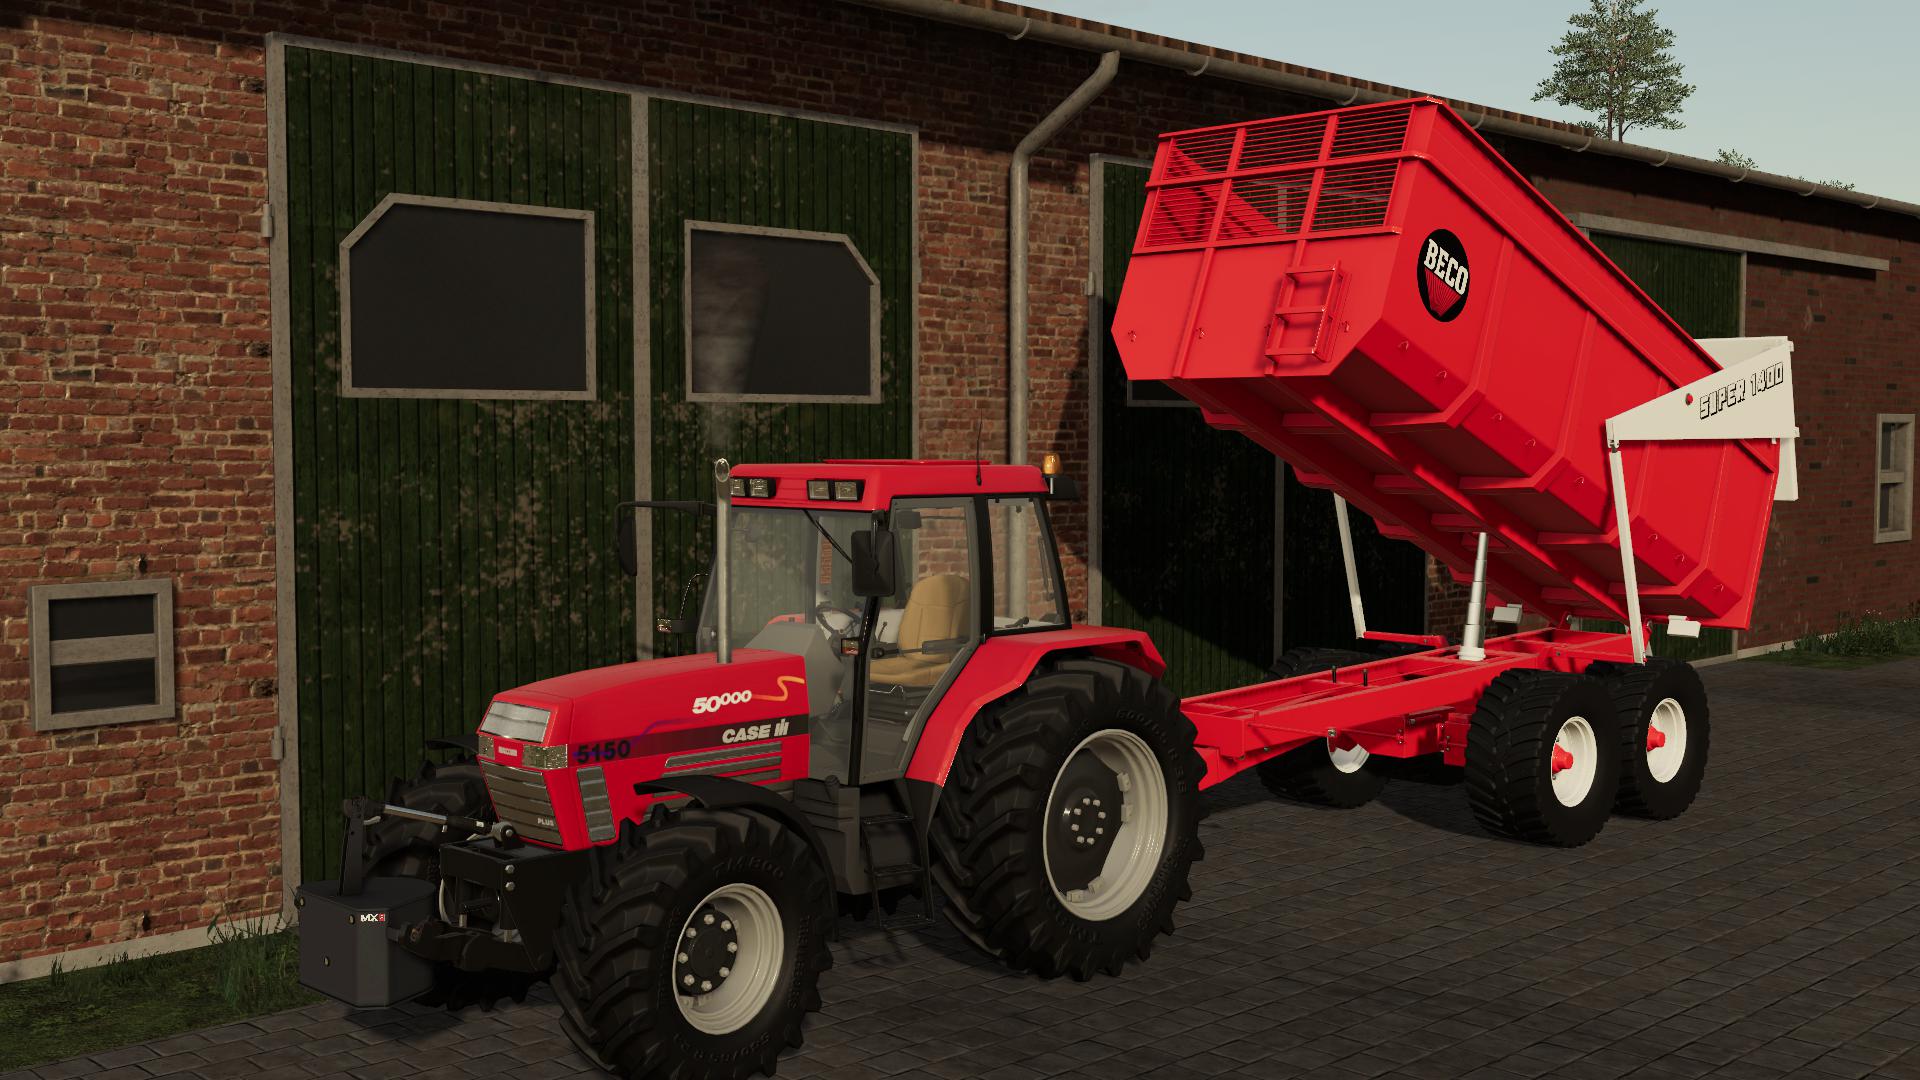 МОД Beco Super 1400 V1000 для Farming Simulator 2019 Fs 19 Прицепы Farming Simulator 2019 7858